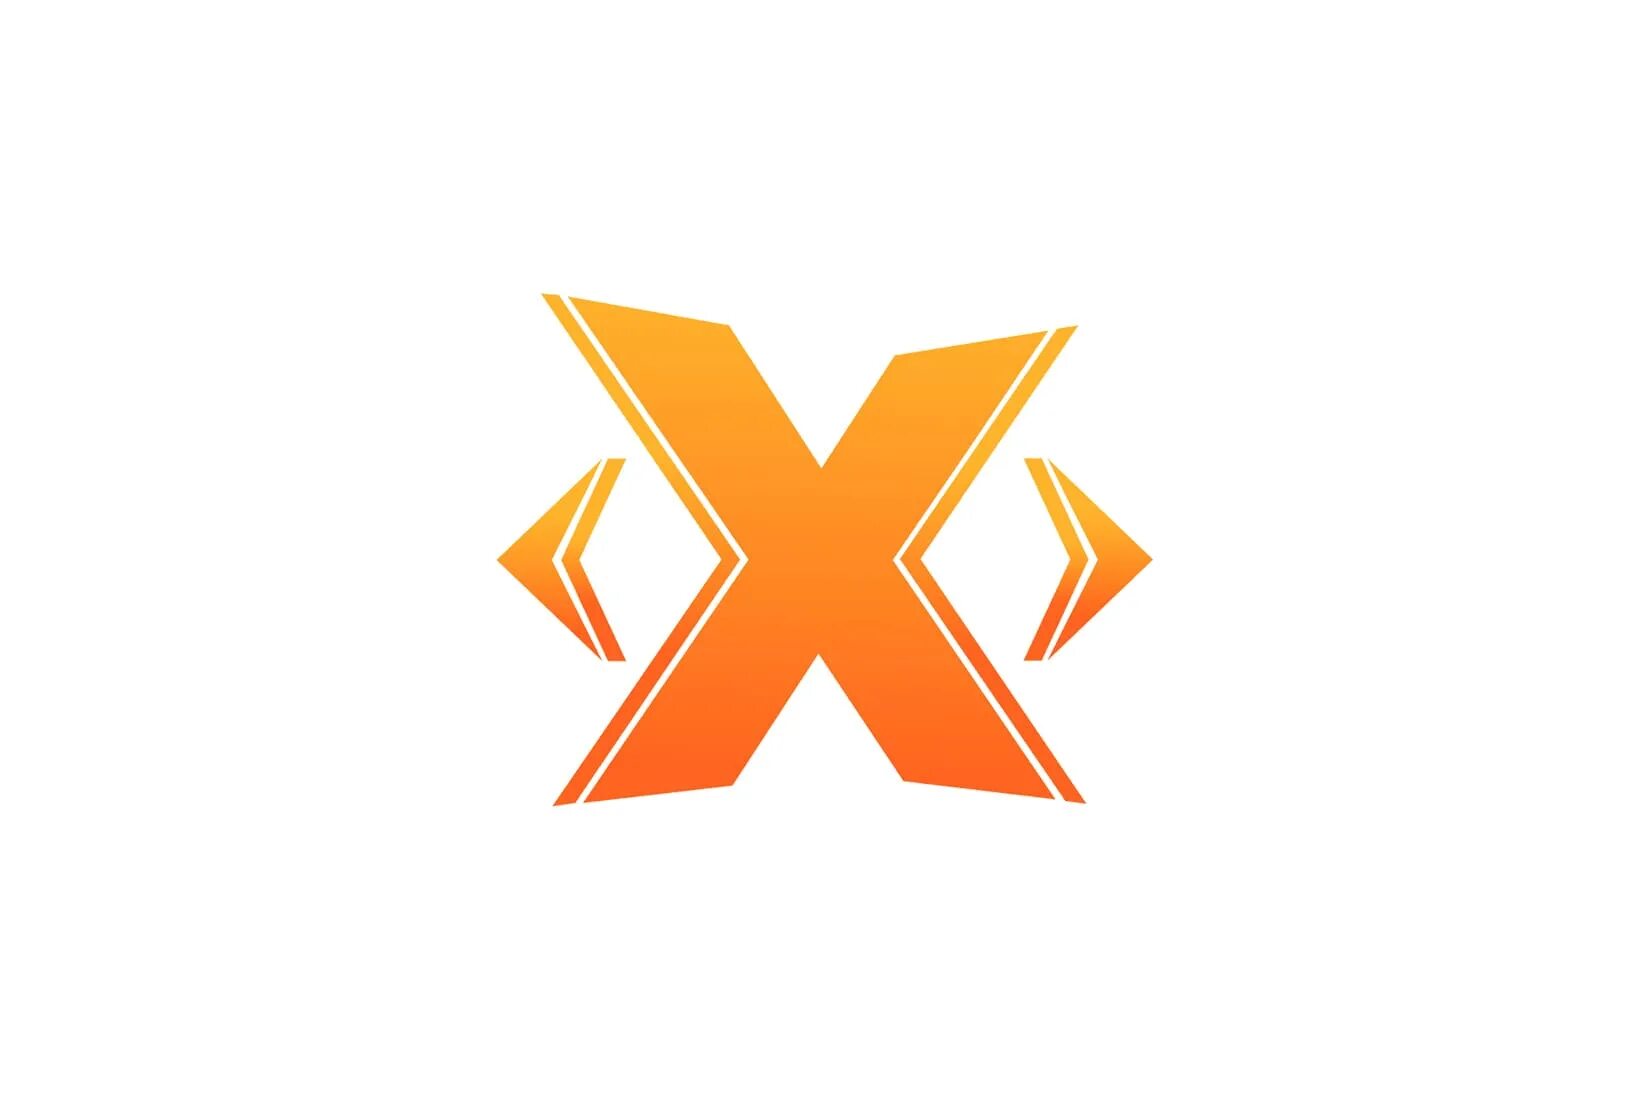 Дж икс. Логотип x. Табак Икс. Икс картинка. 3 Икса.